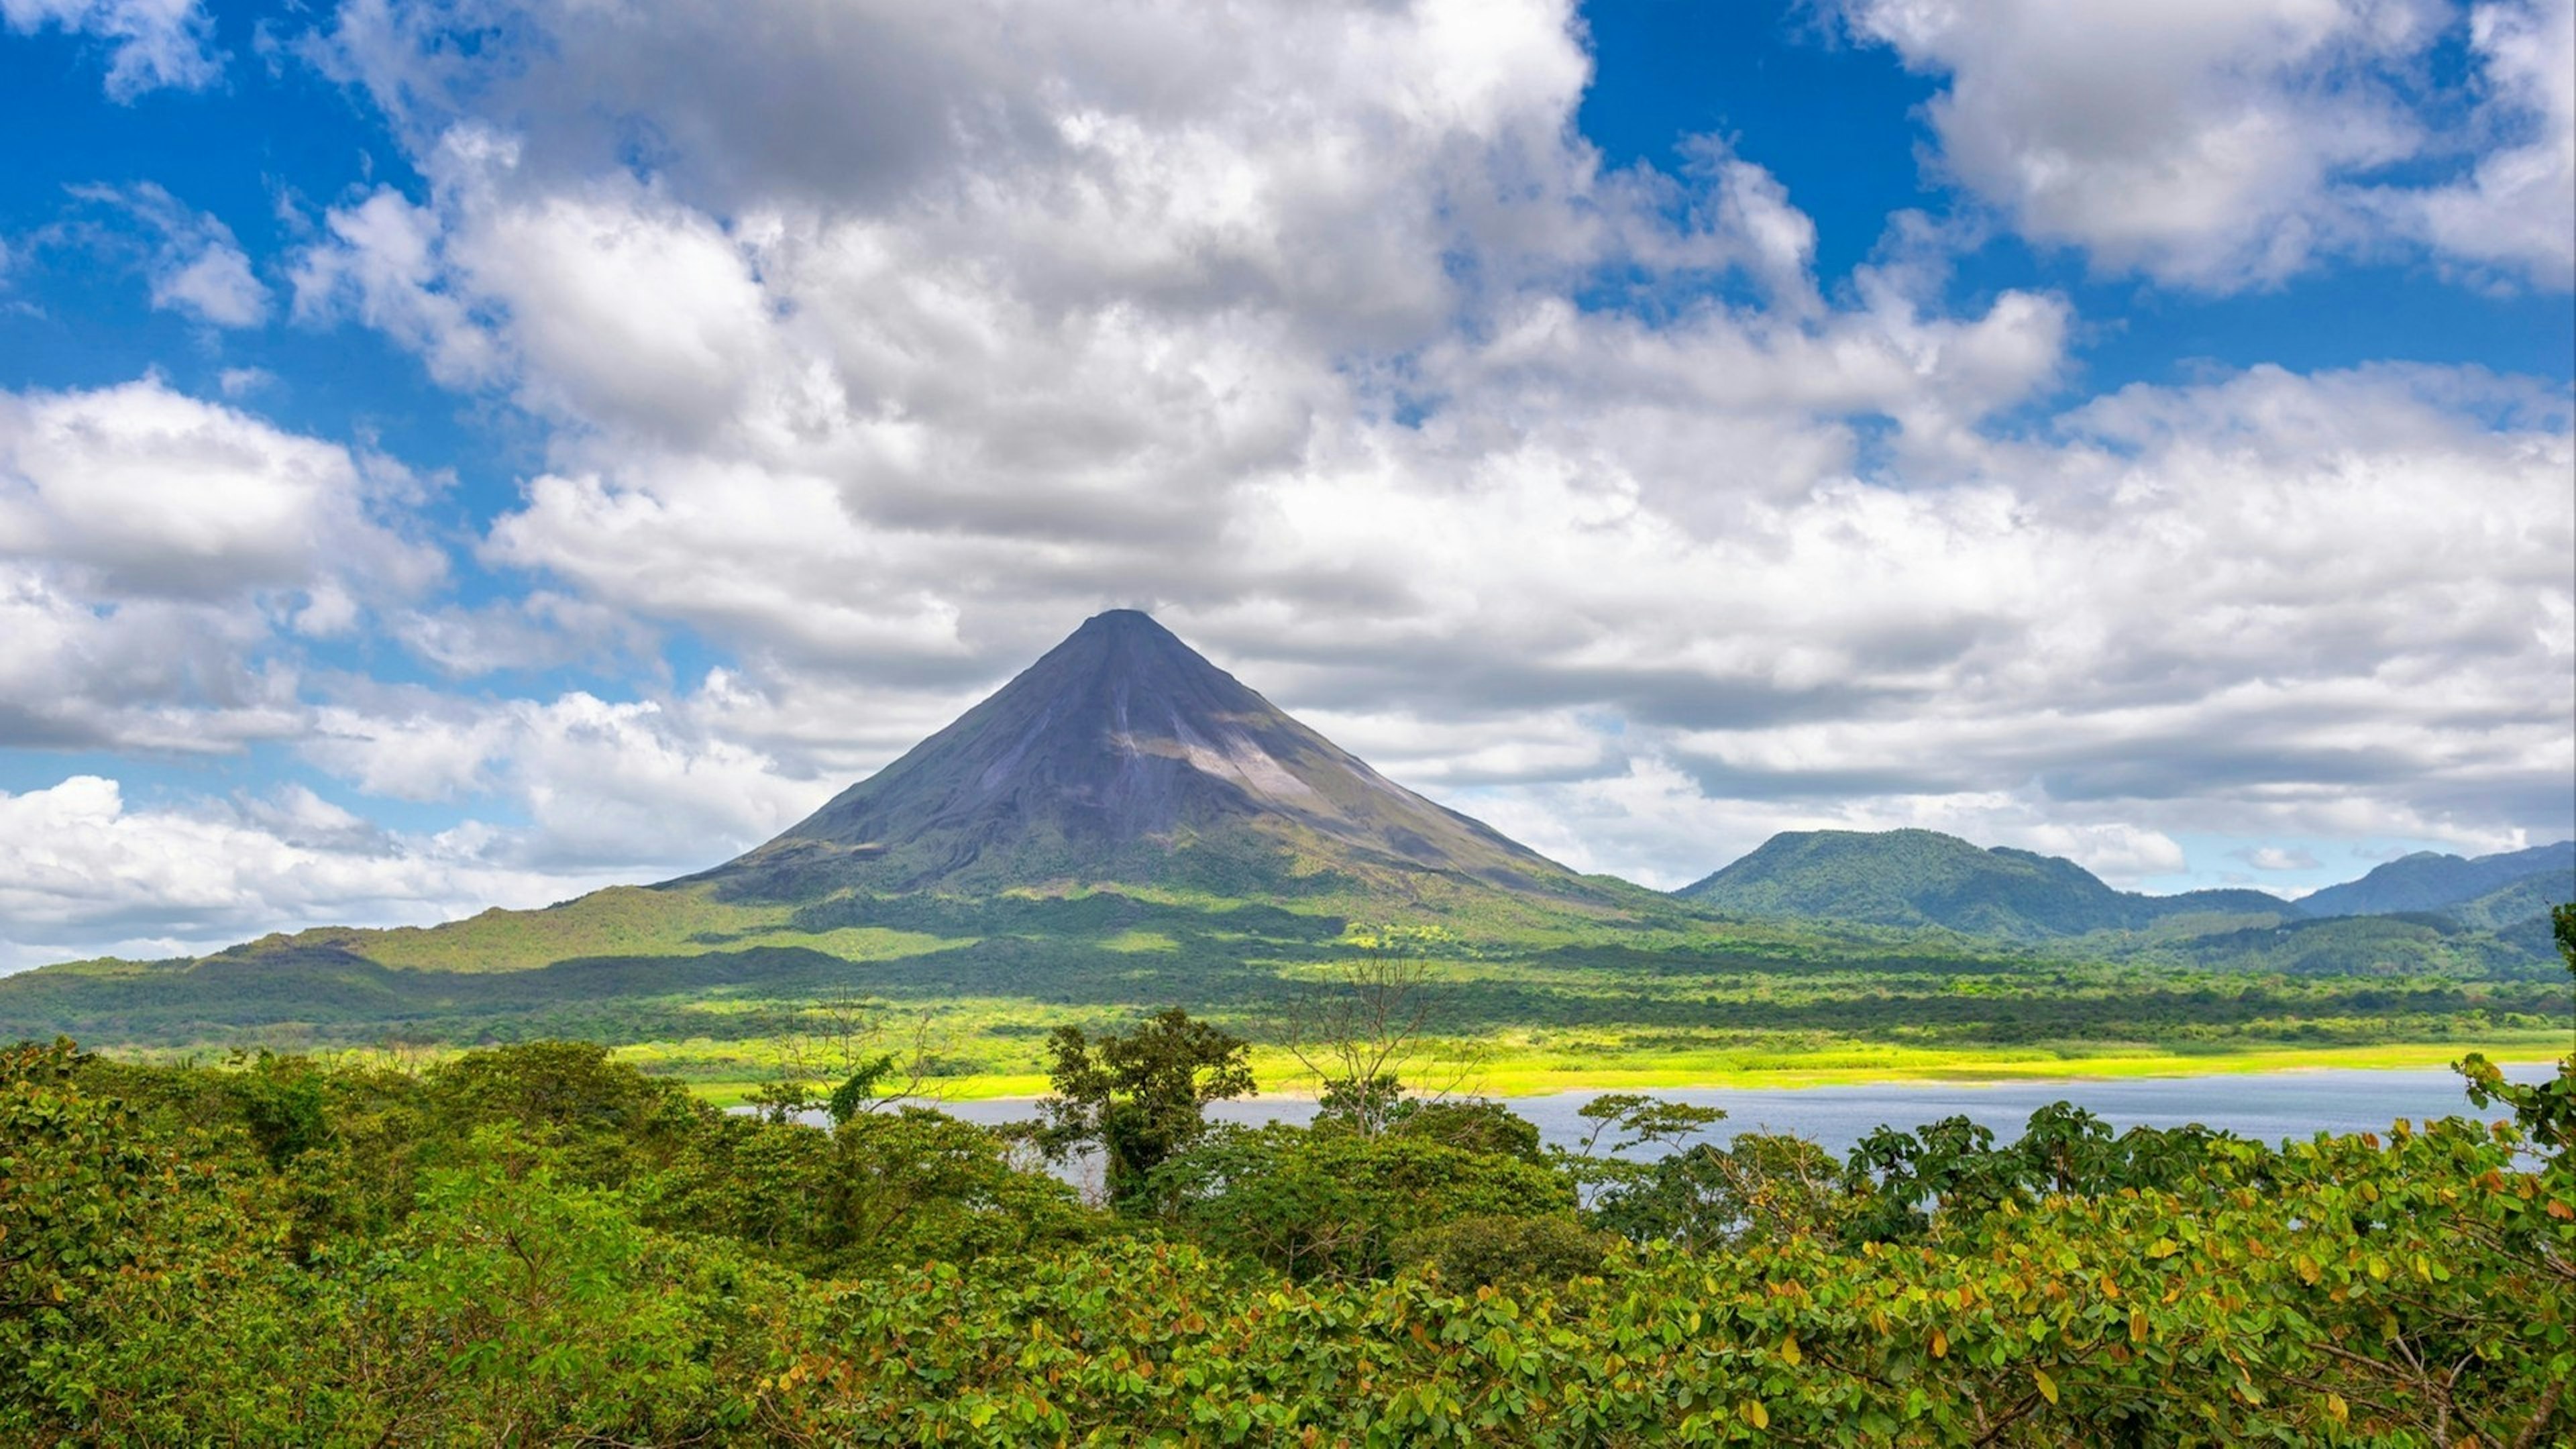 Amazing view of beautiful nature of Costa Rica with smoking volcano